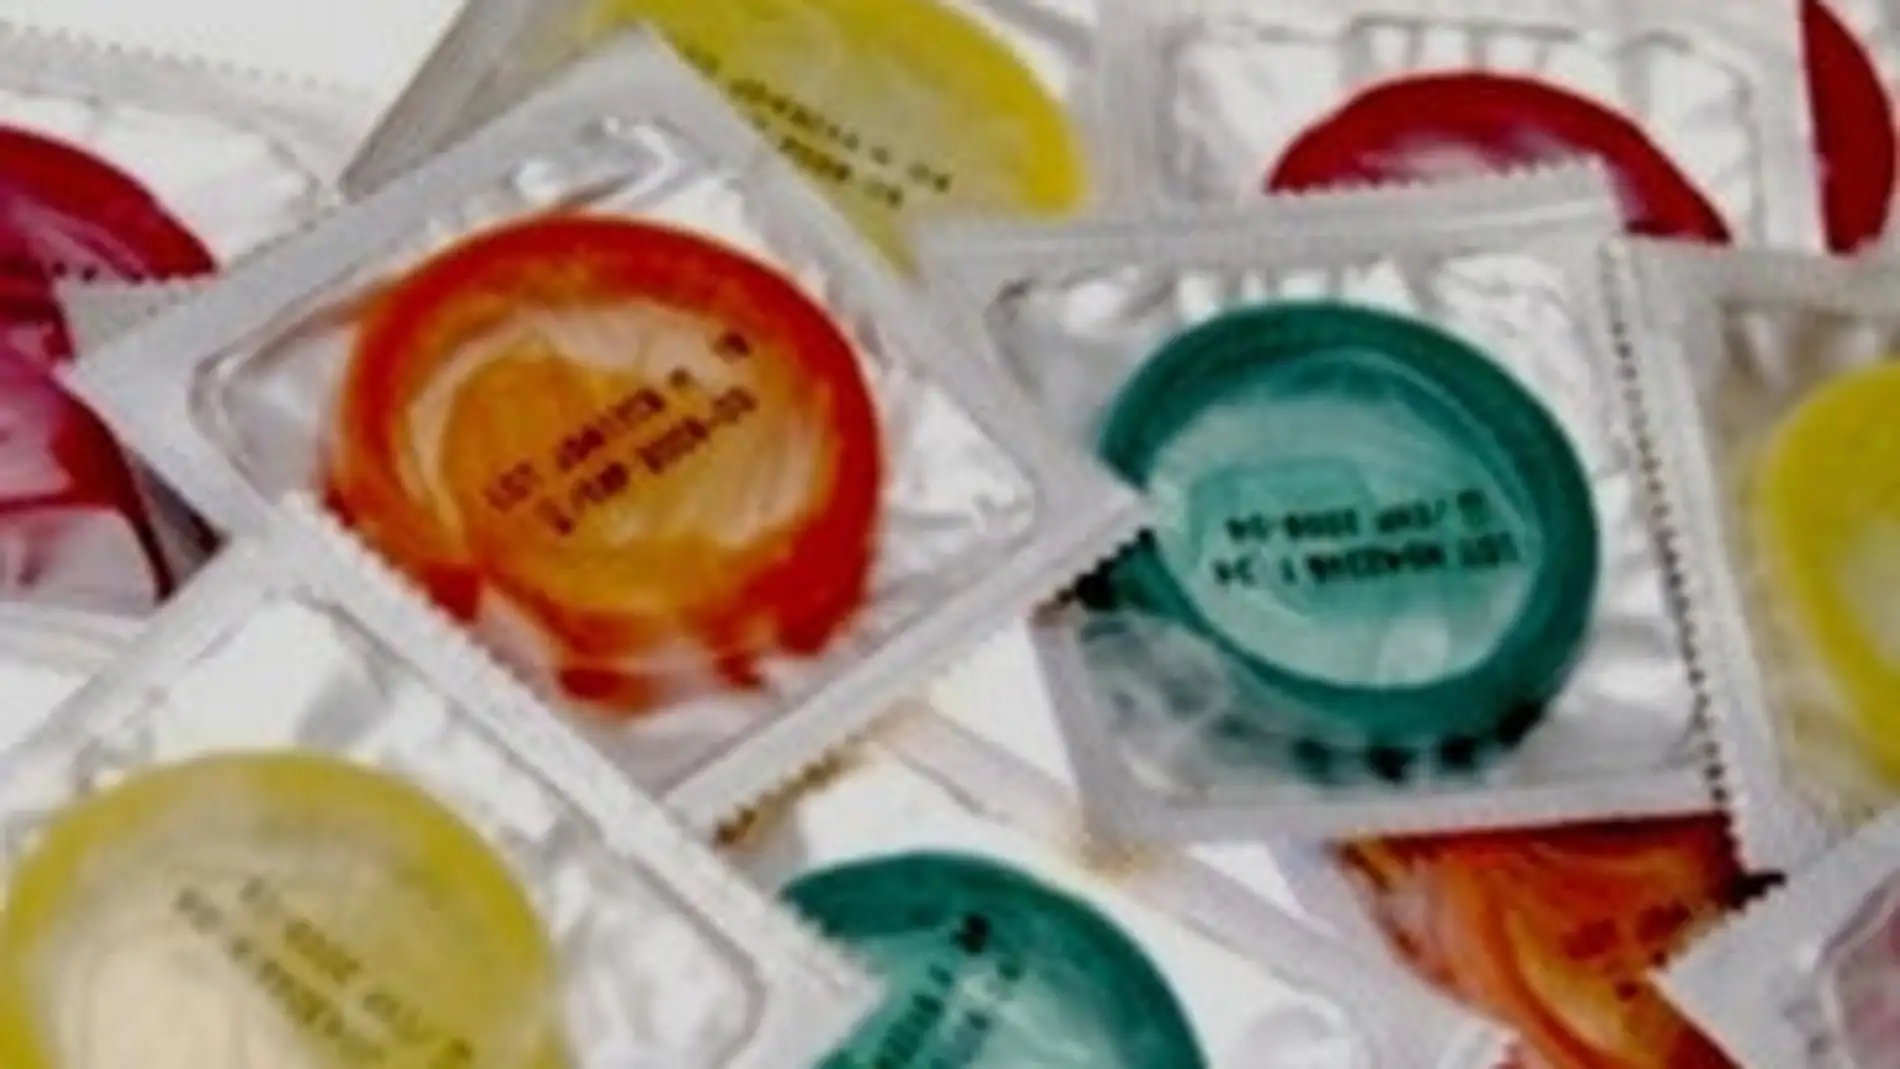 Malasia crea el "primer preservativo unisex" del mundo 